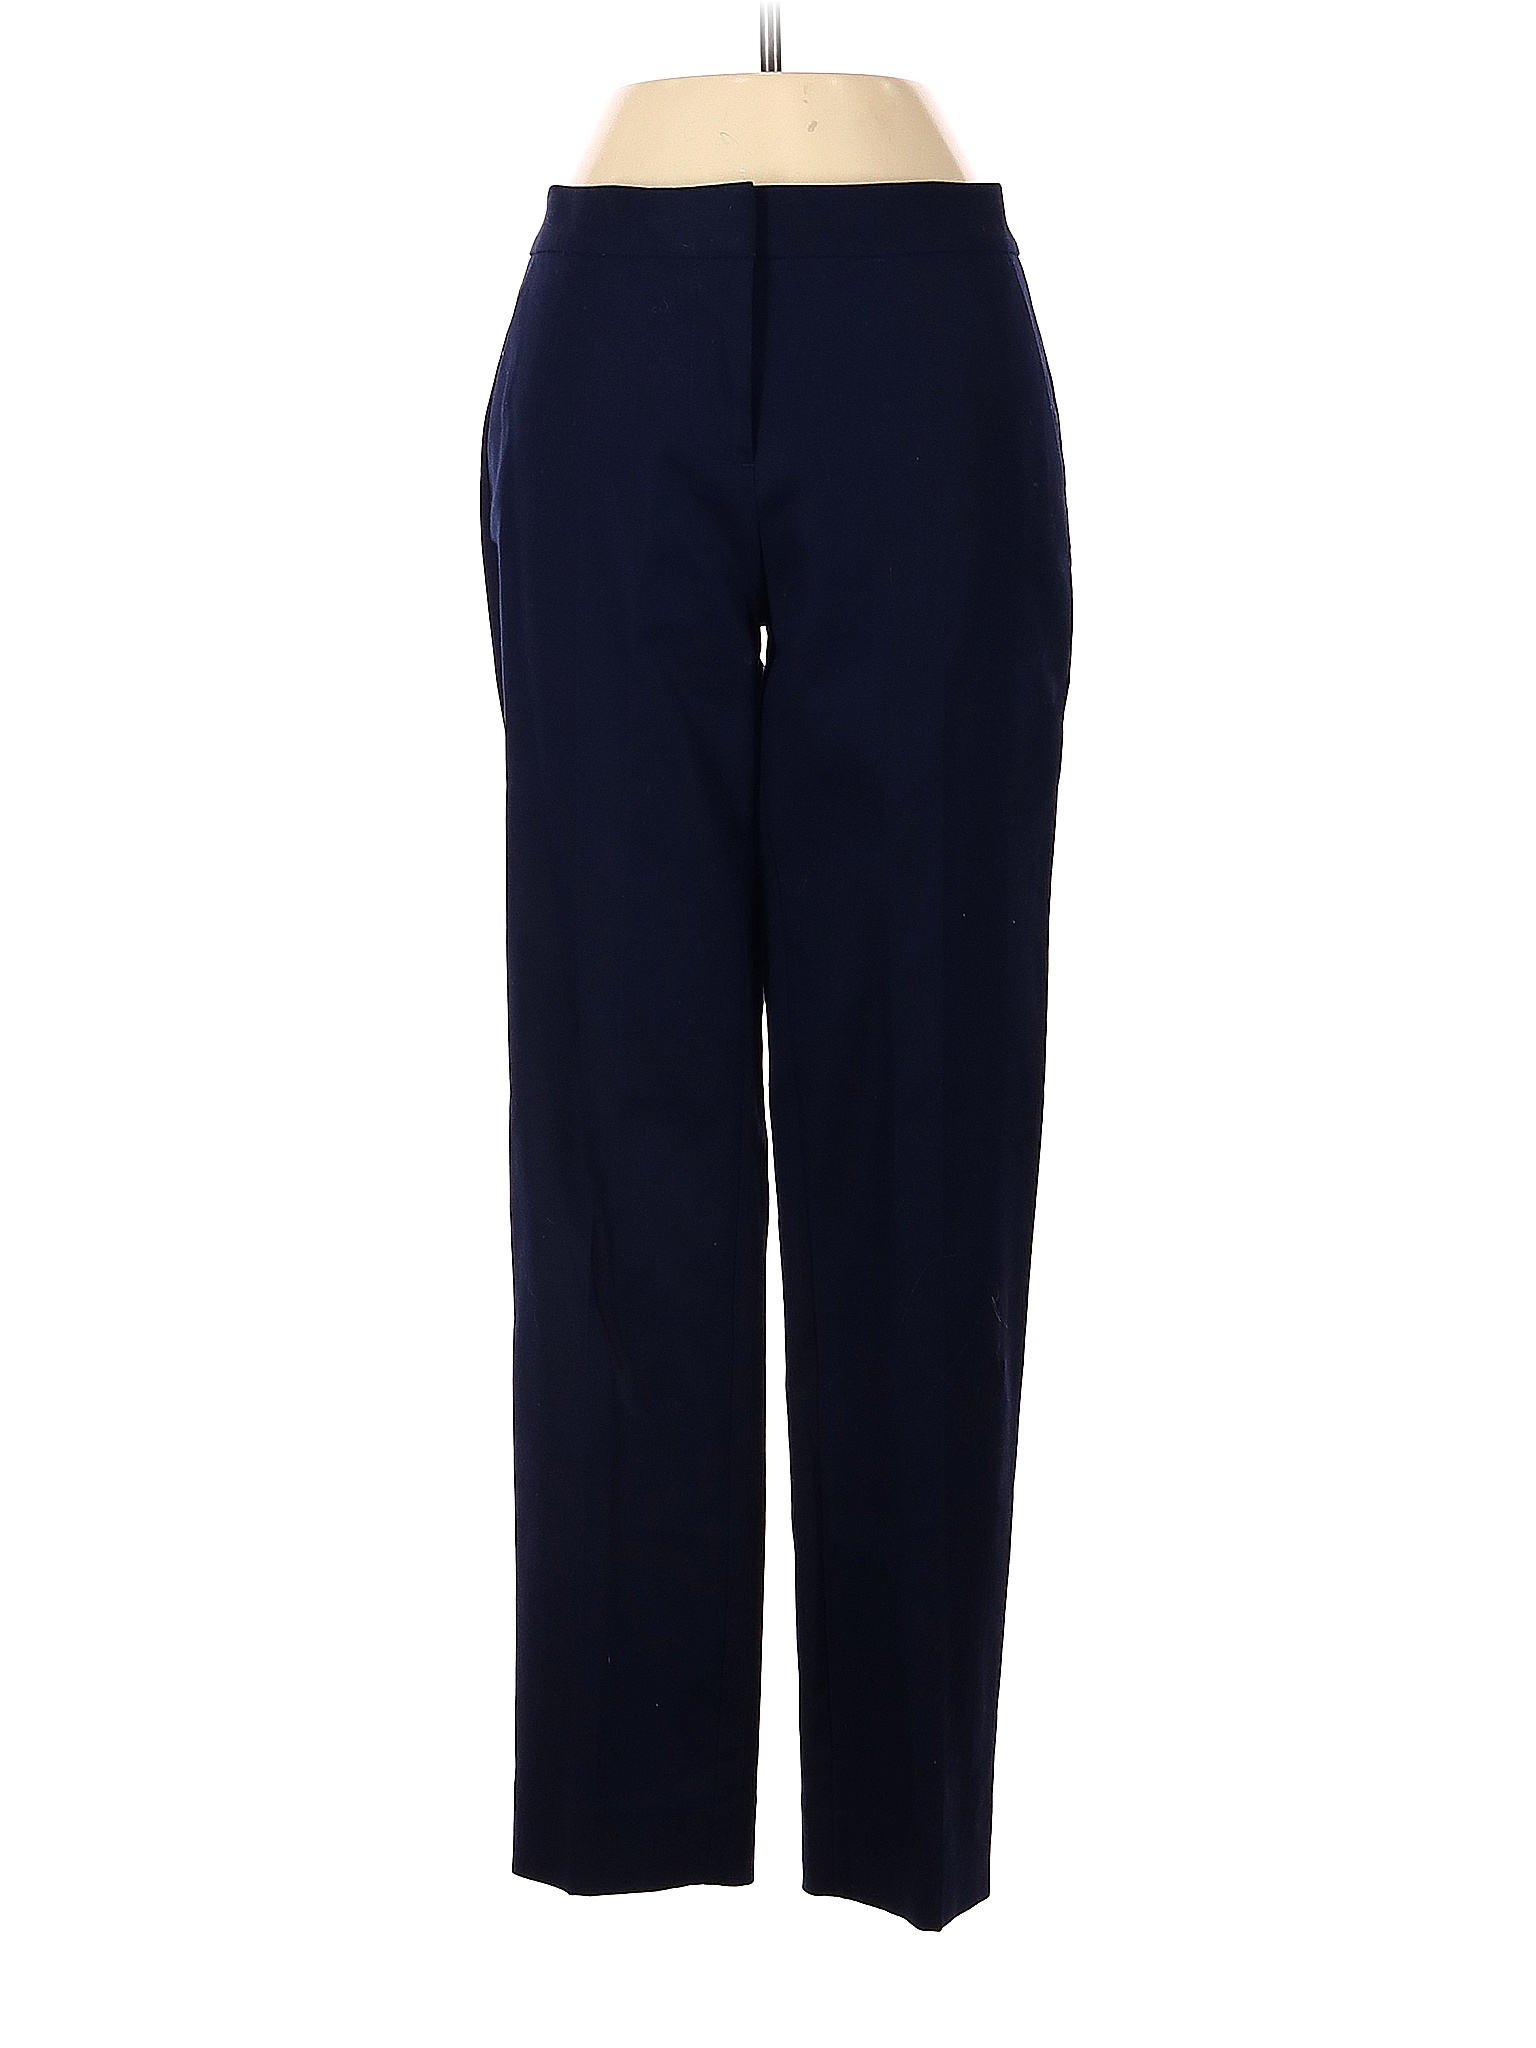 J.Crew 100% Cotton Solid Navy Blue Dress Pants Size 4 - 92% off | thredUP